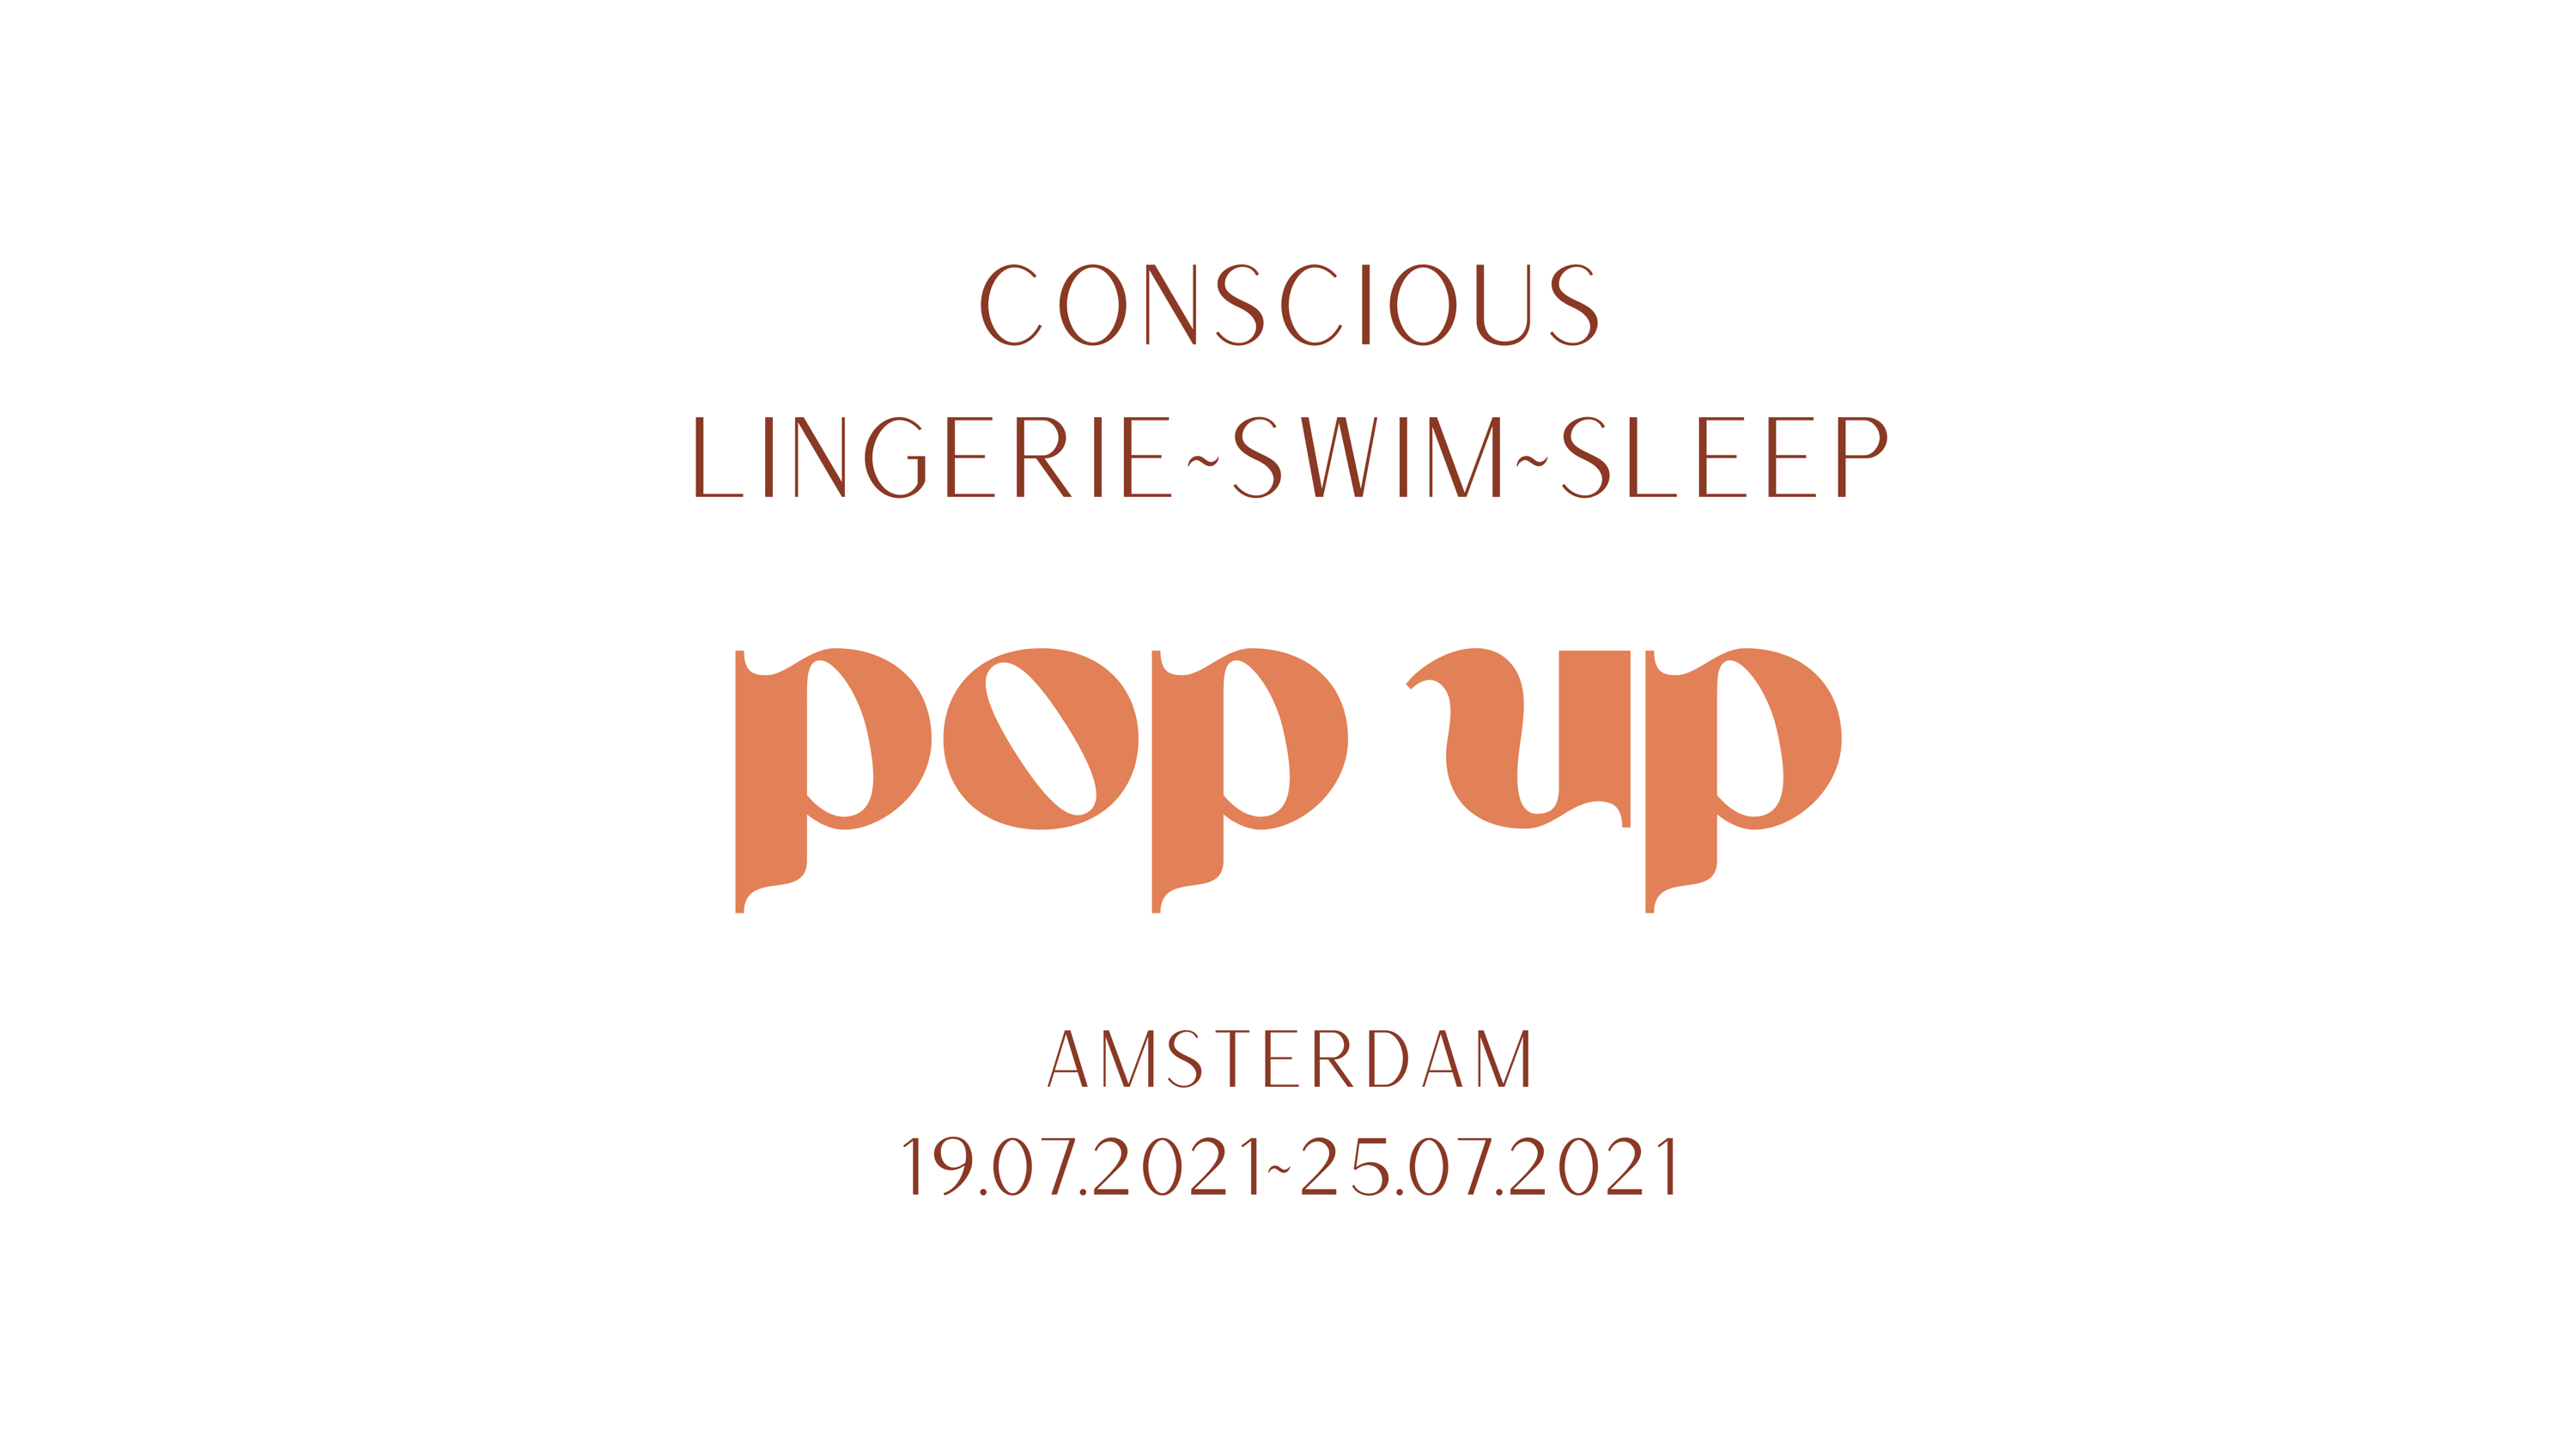 conscious lingerie swim sleep pop up amsterdam 19.07.2021-25.07.2021 the lingerist le nap semi romantic savara intimates save the wave